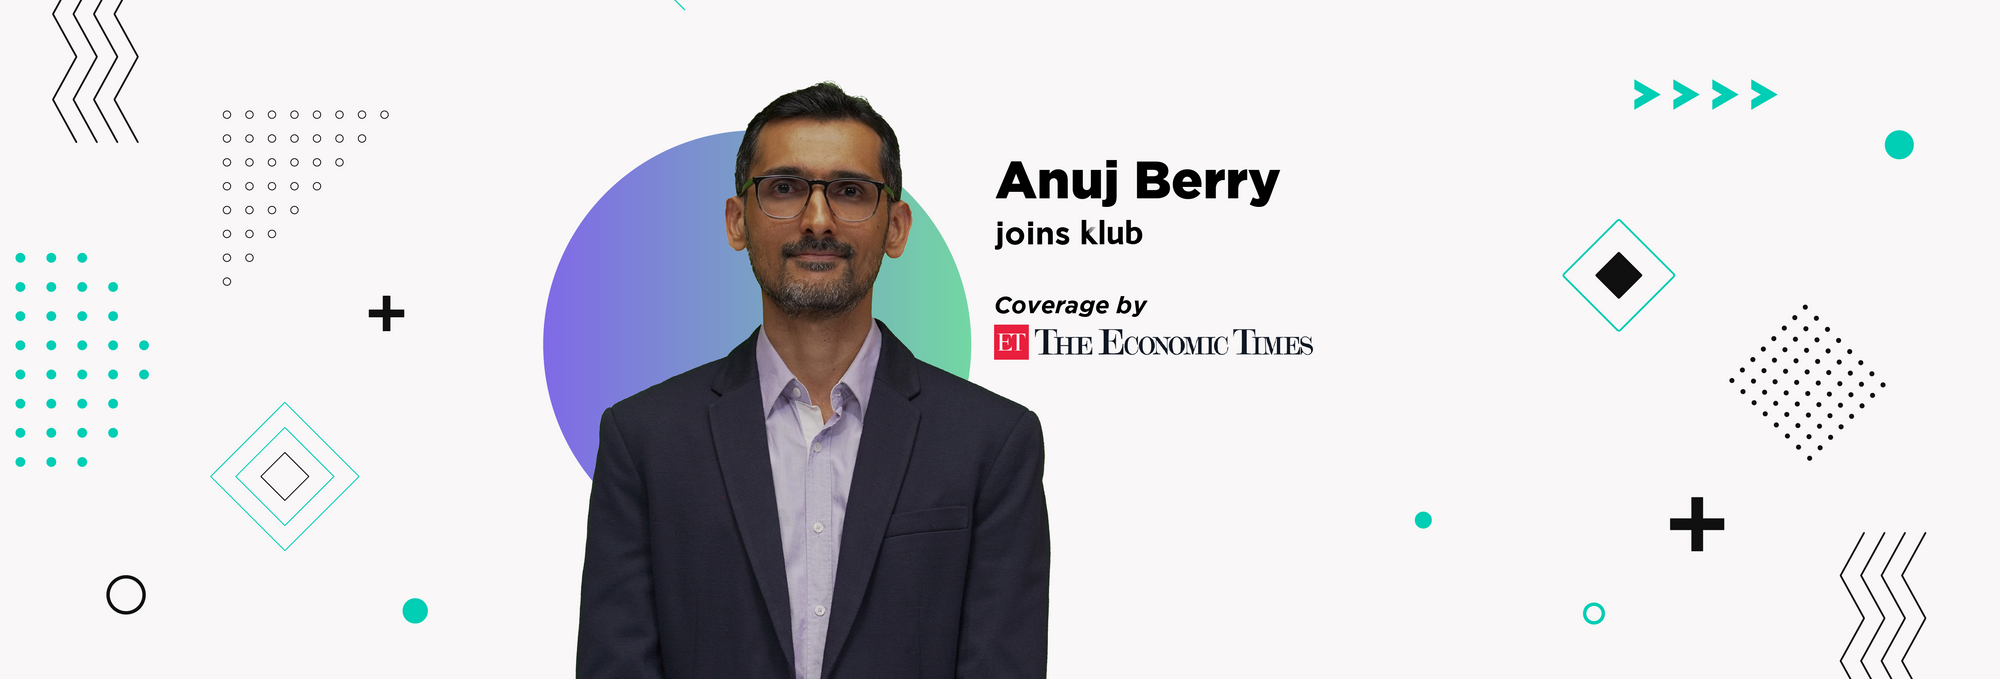 Financing startup Klub on boards Anuj Berry as Entrepreneur In Residence